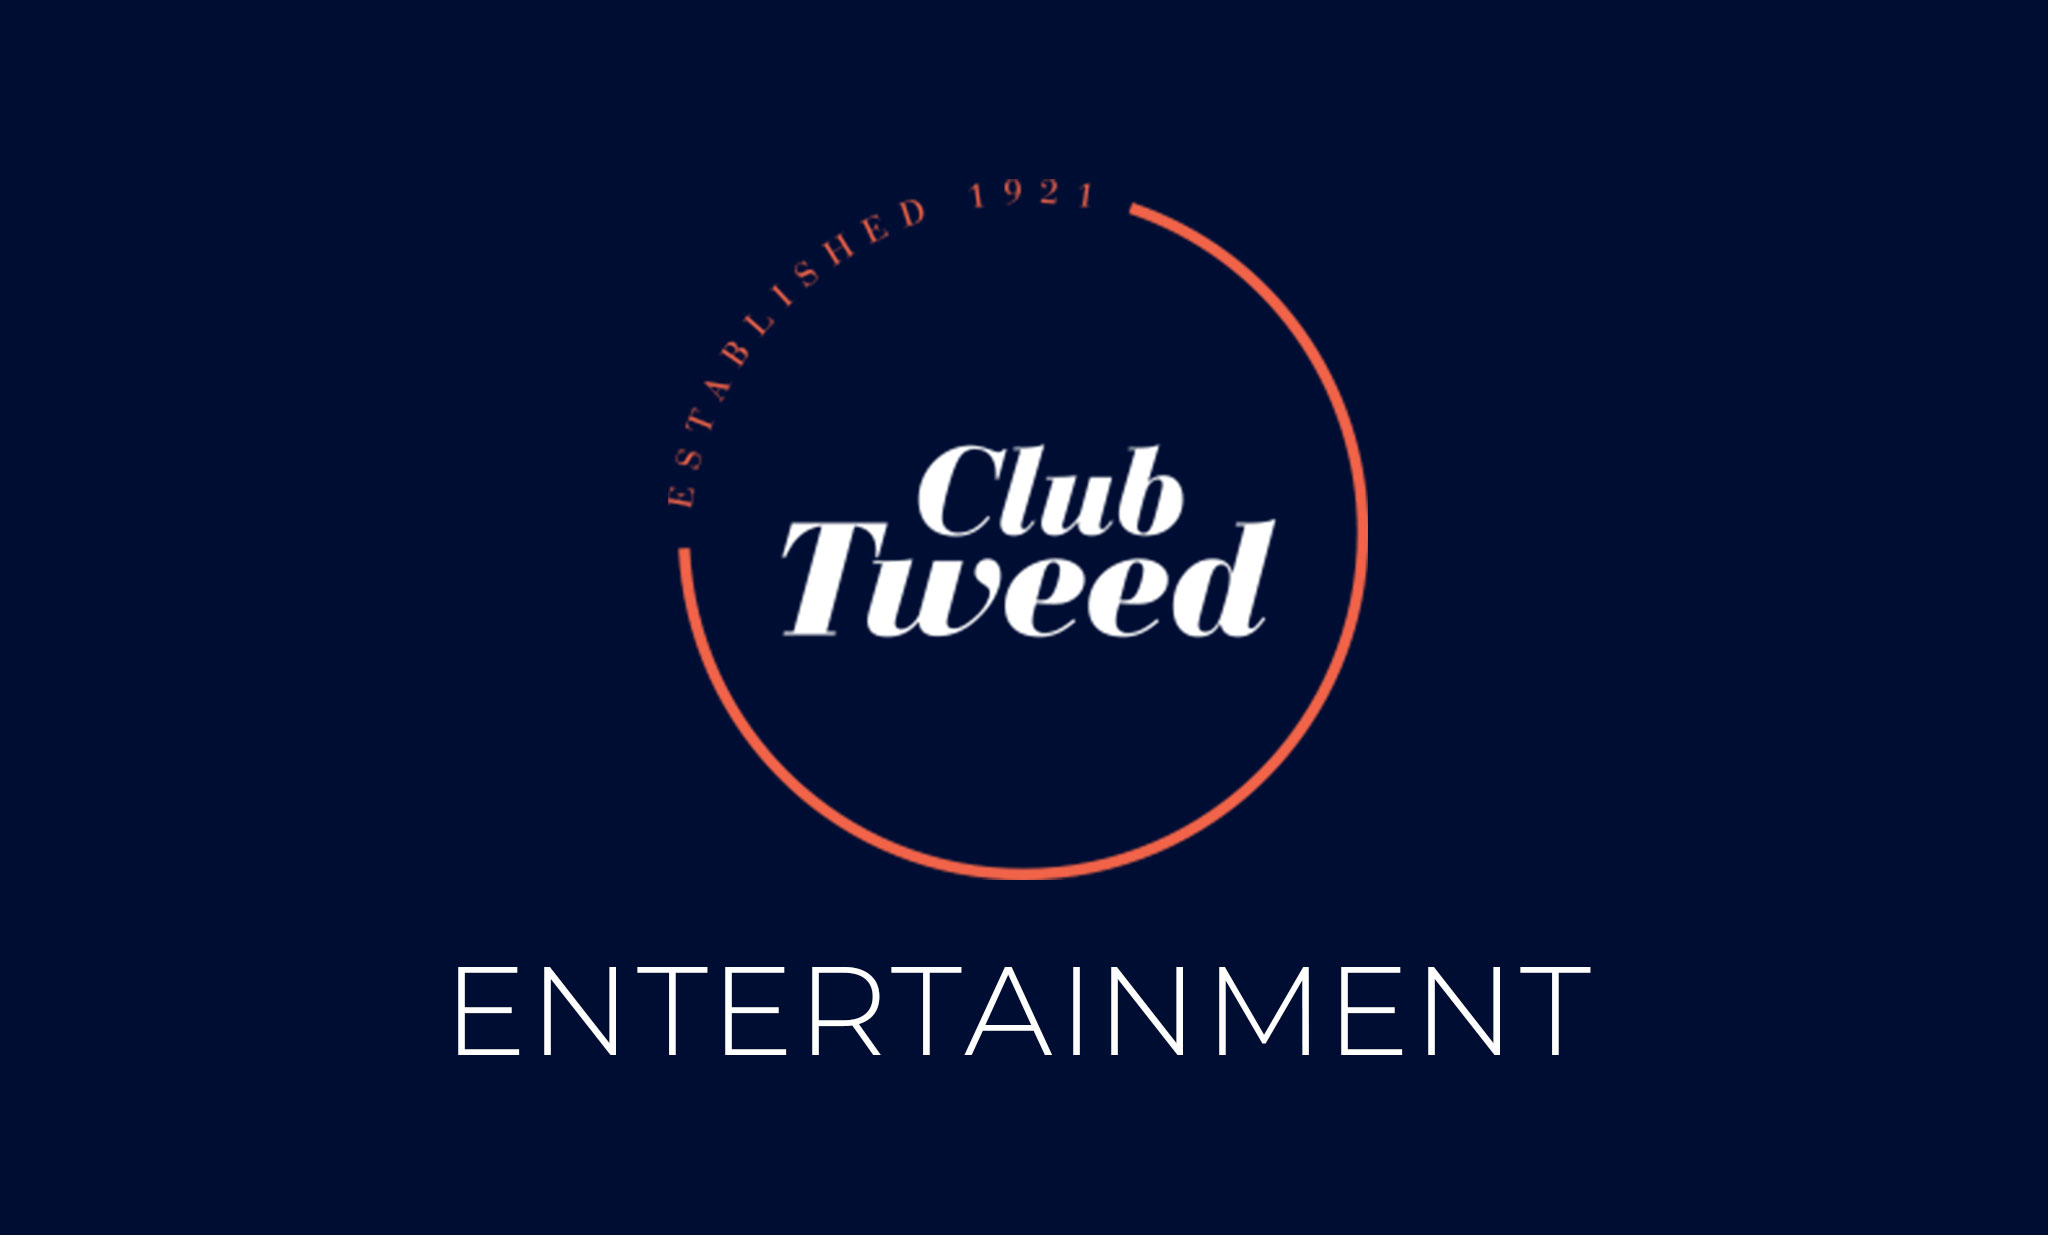 Club-Tweed-entertainment